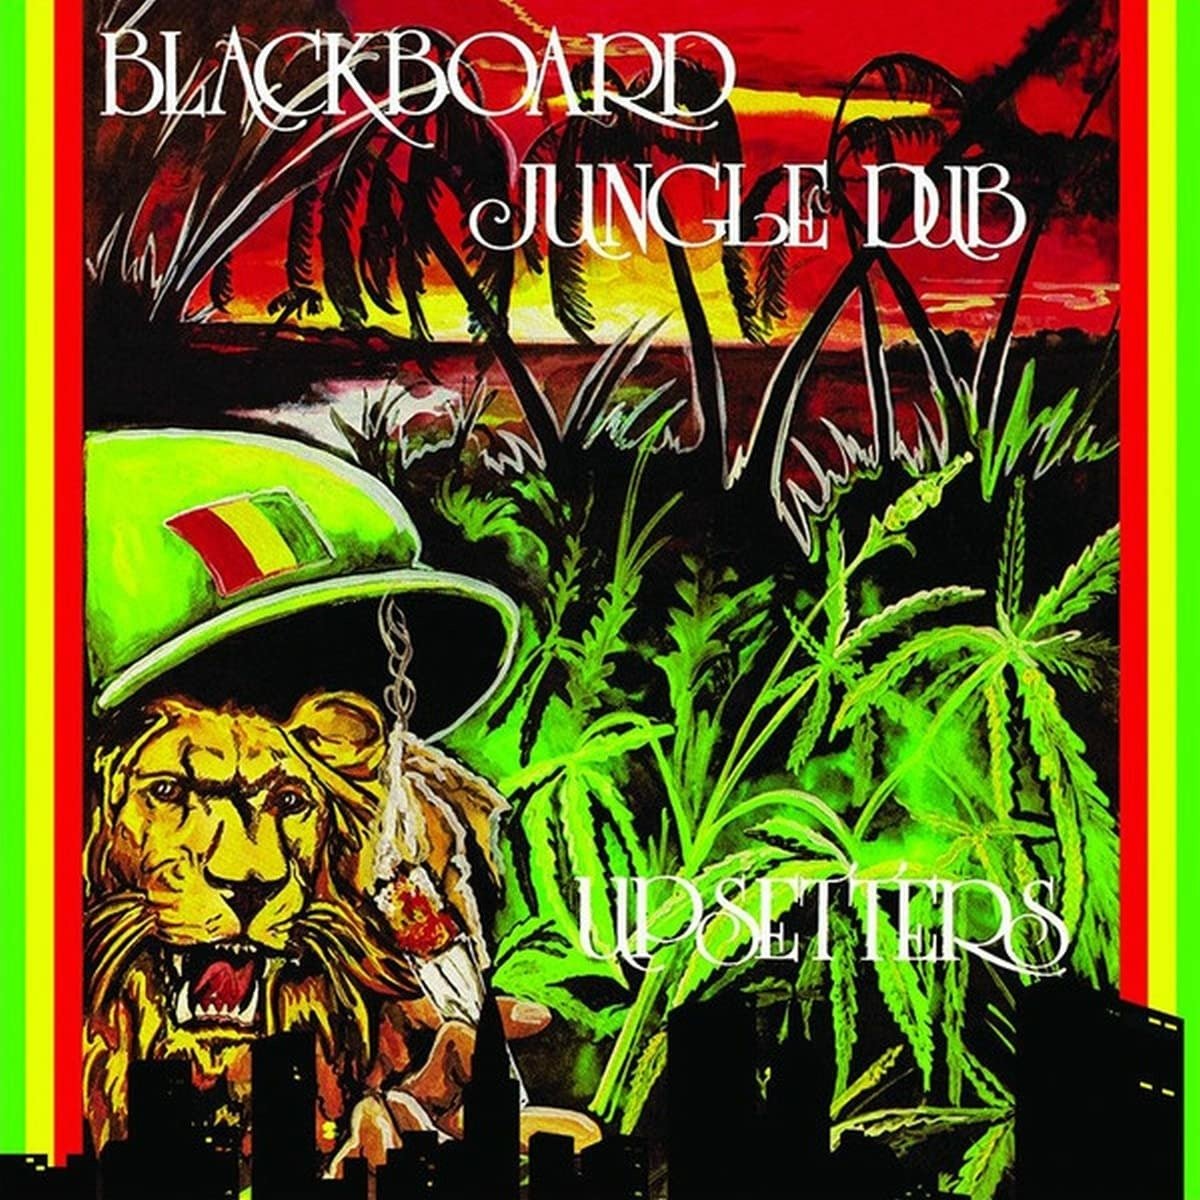 CD Shop - UPSETTERS BLACKBOARD JUNGLE DUB